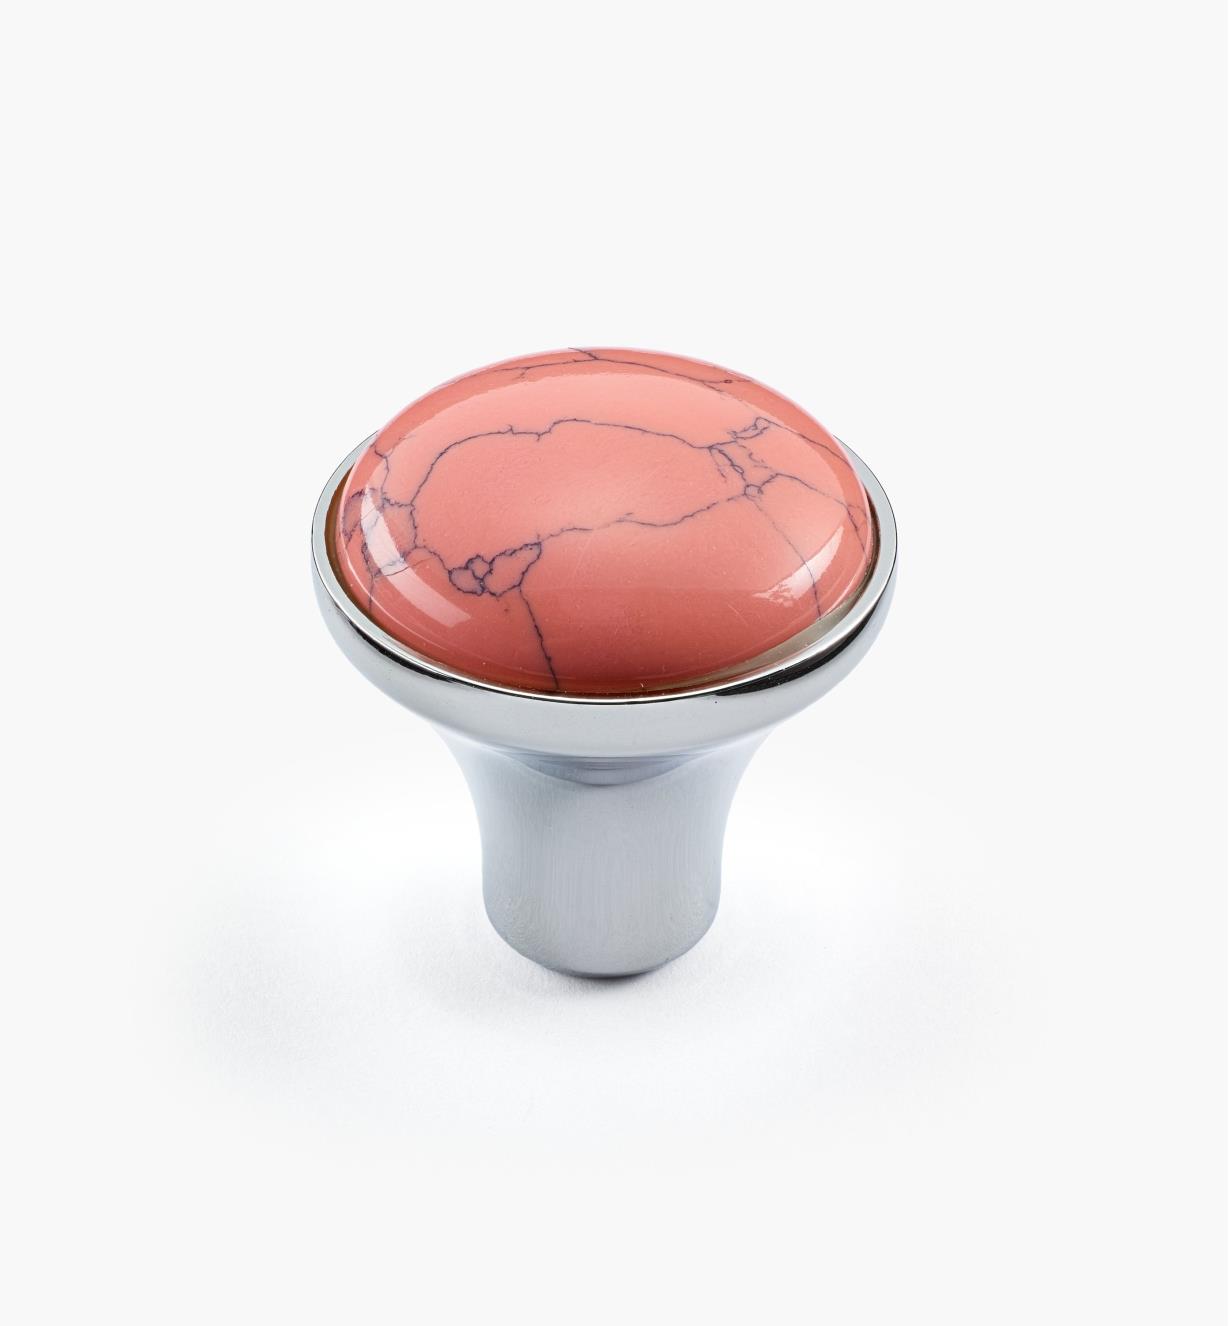 01A3642 - Grand bouton gemme rose, fini chrome poli, 28 mm